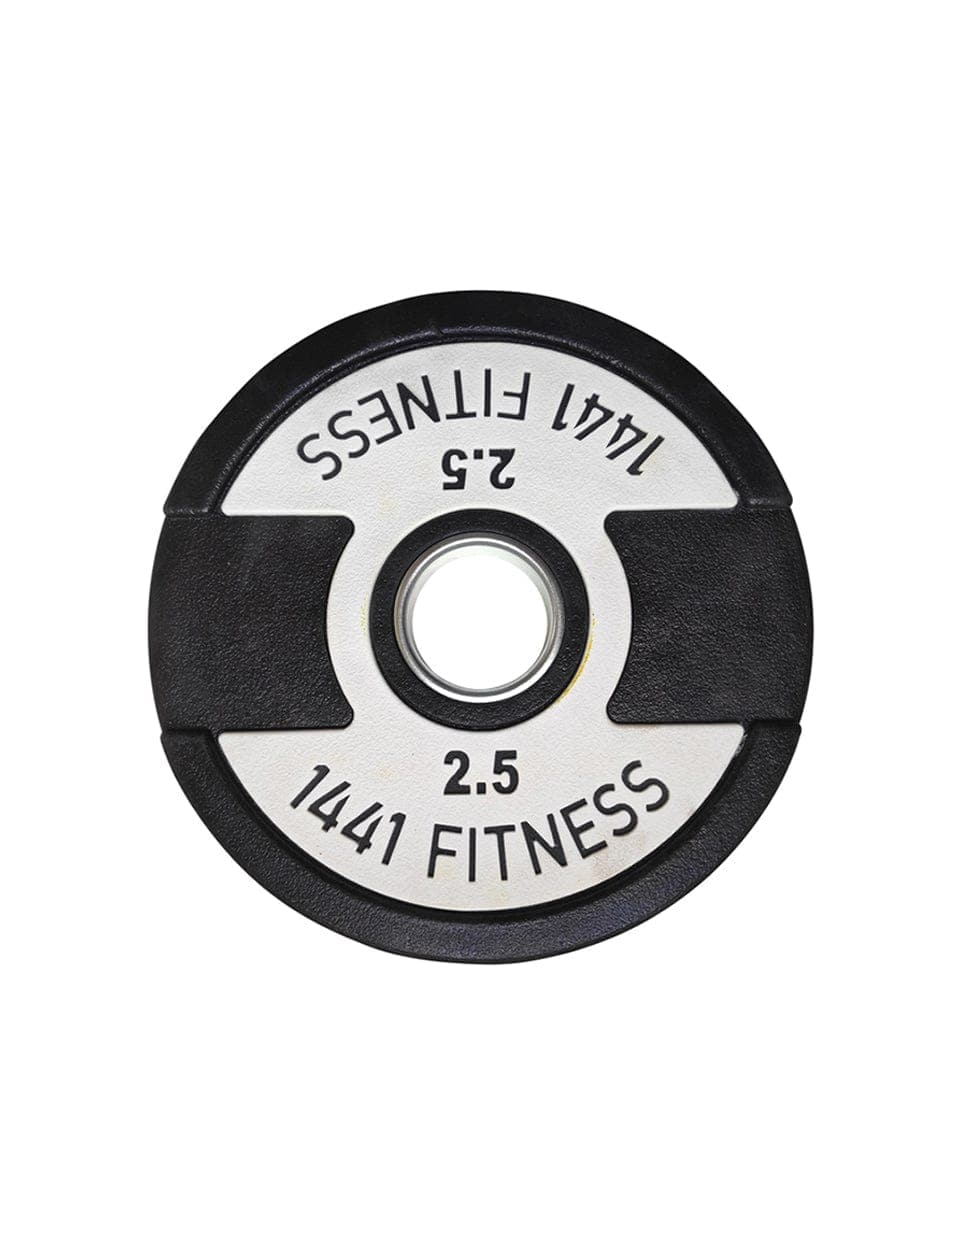 PRSAE Plates & Bars 1441 Fitness Dual Grip Premium Olympic Plates 2.5 Kg to 20 Kg - 1 Year Warranty